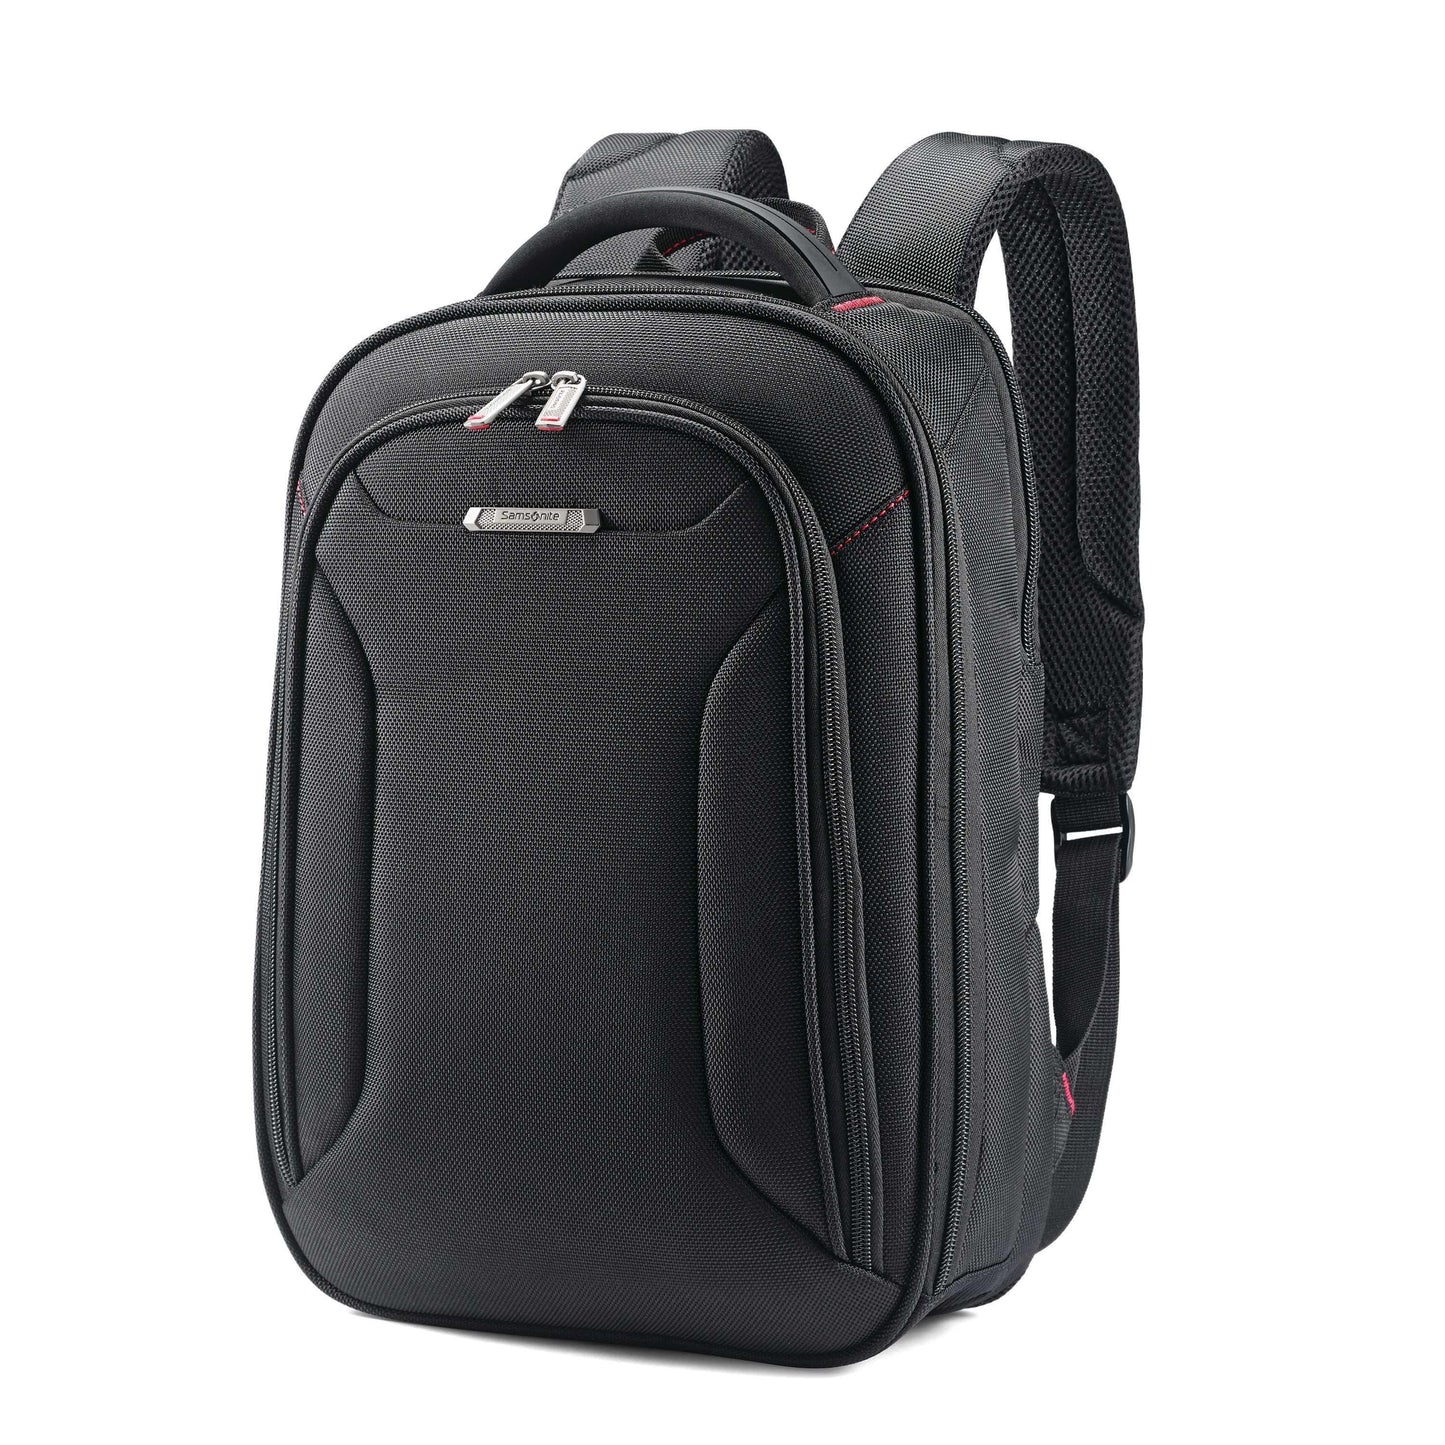 Samsonite Xenon 3.0 Small Backpack, Black